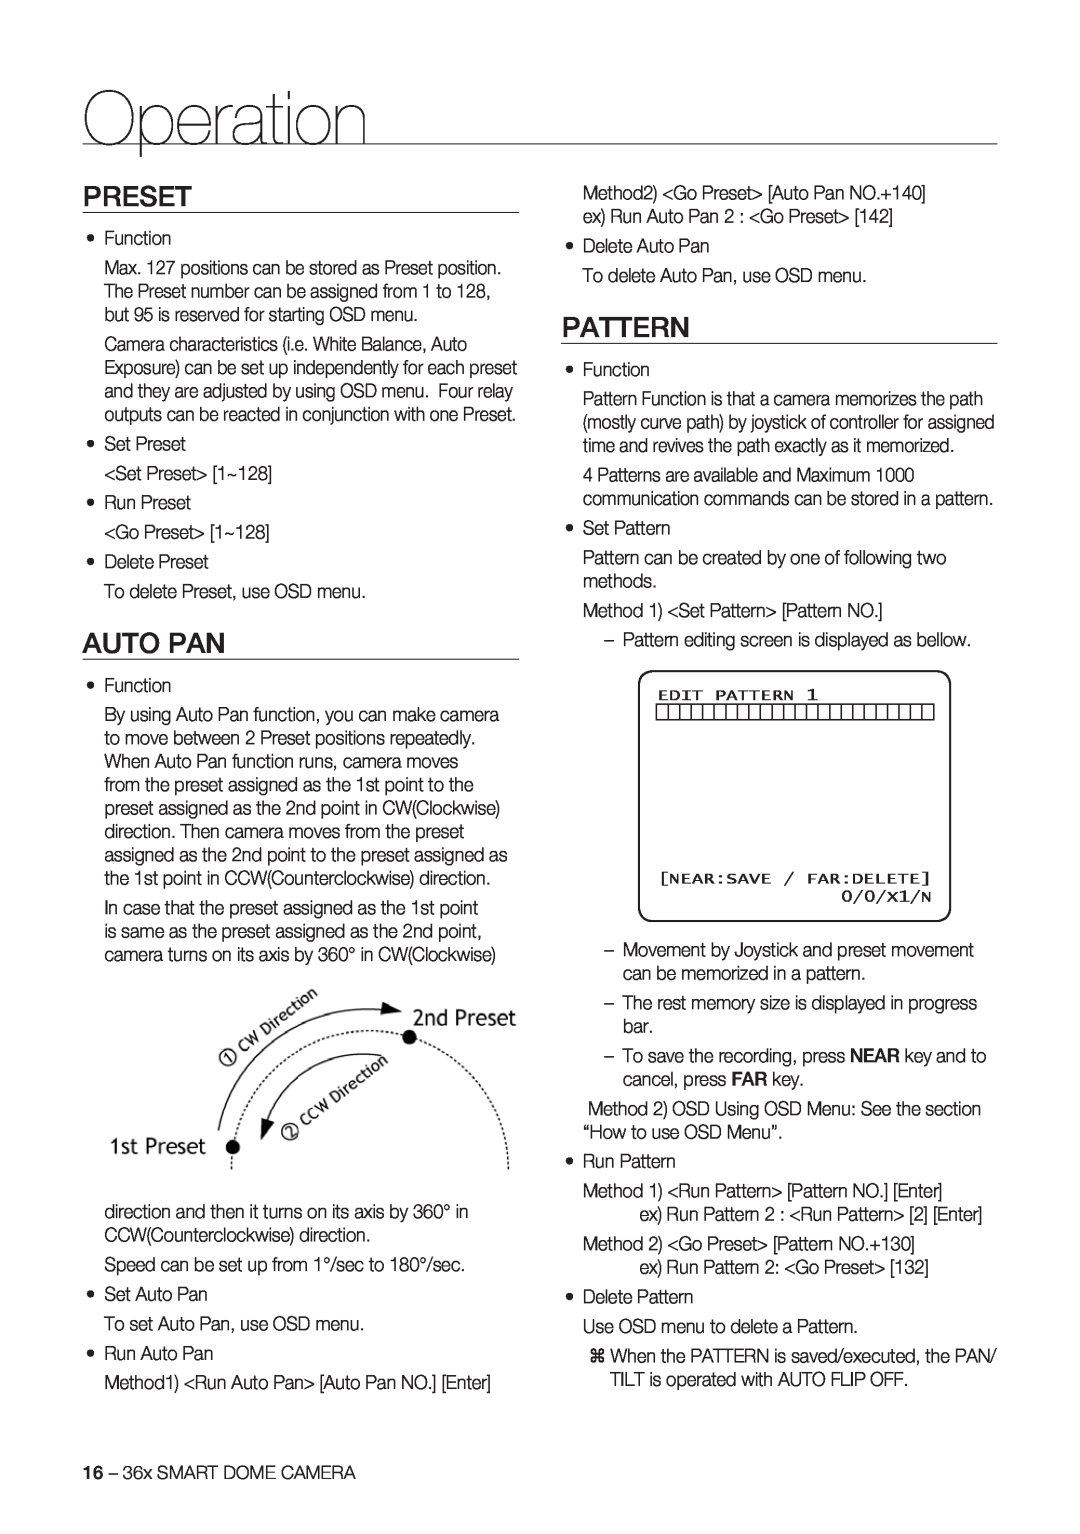 Samsung SCC-C7478P manual Preset, Auto Pan, Pattern, Operation 